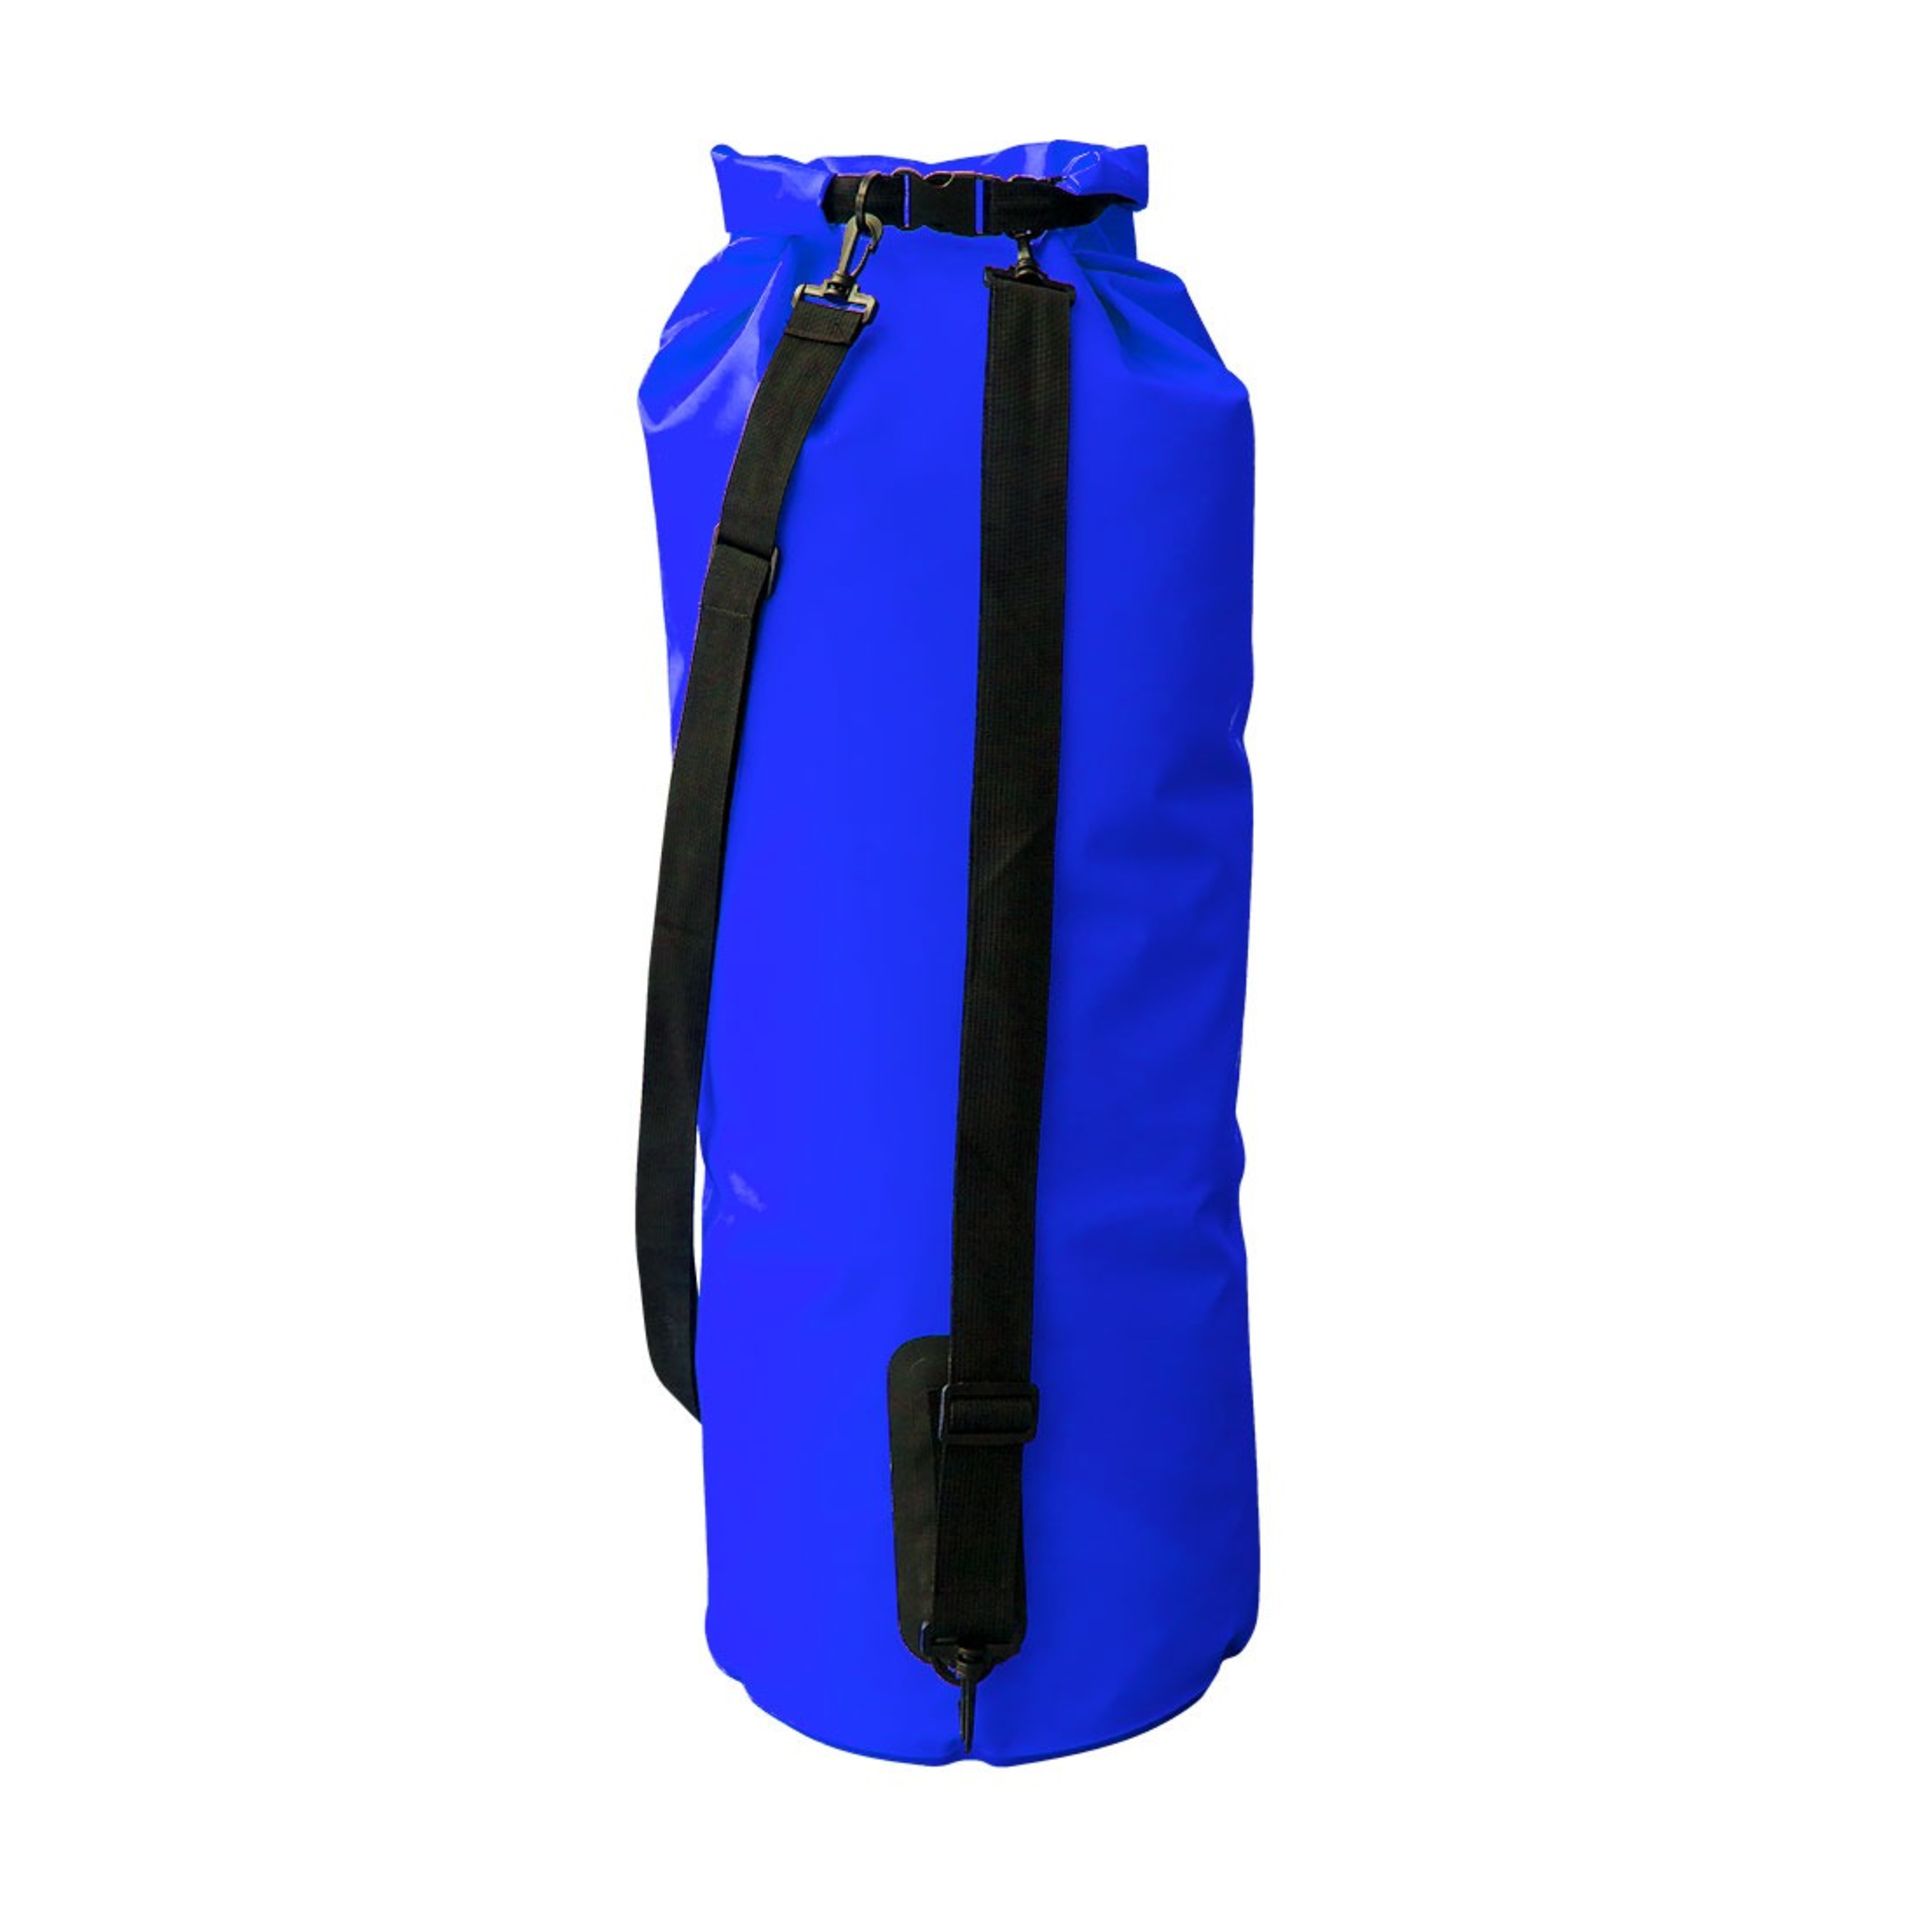 Brand New Portwest 24x Blue Waterproof Dry Bag 60L - RRP £24.93 Each (R42)